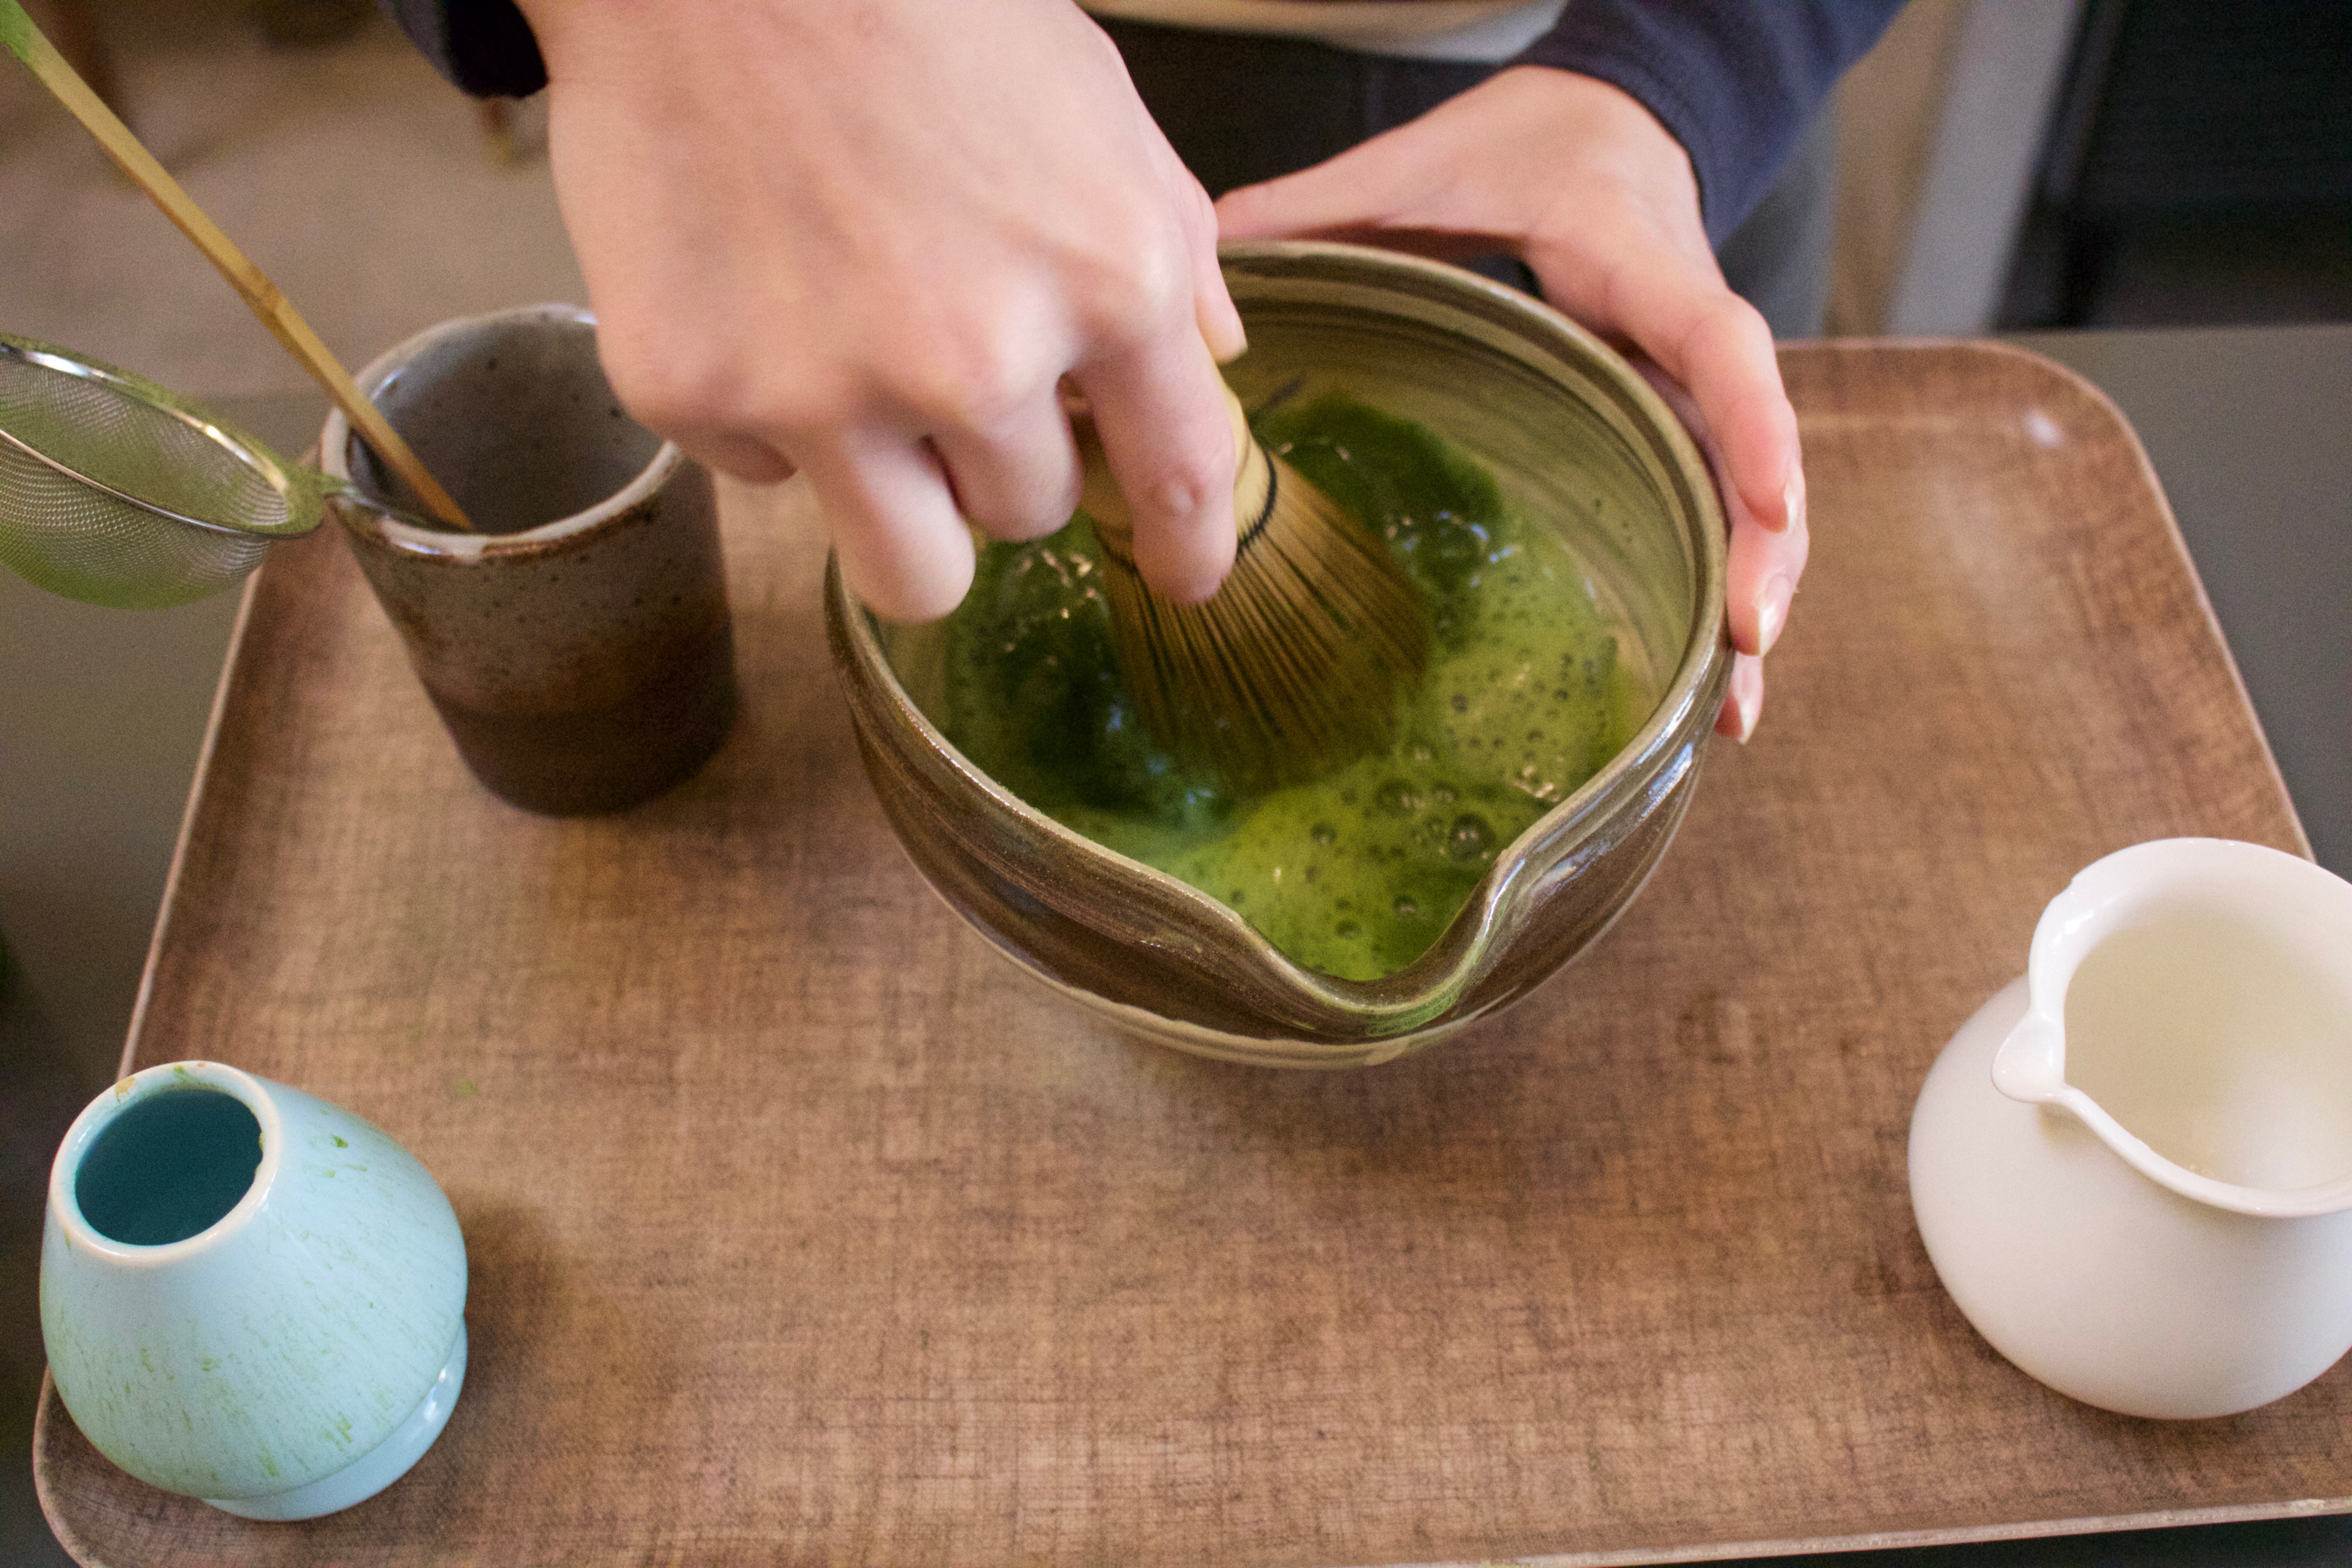 Making a Matcha tea in a bowl